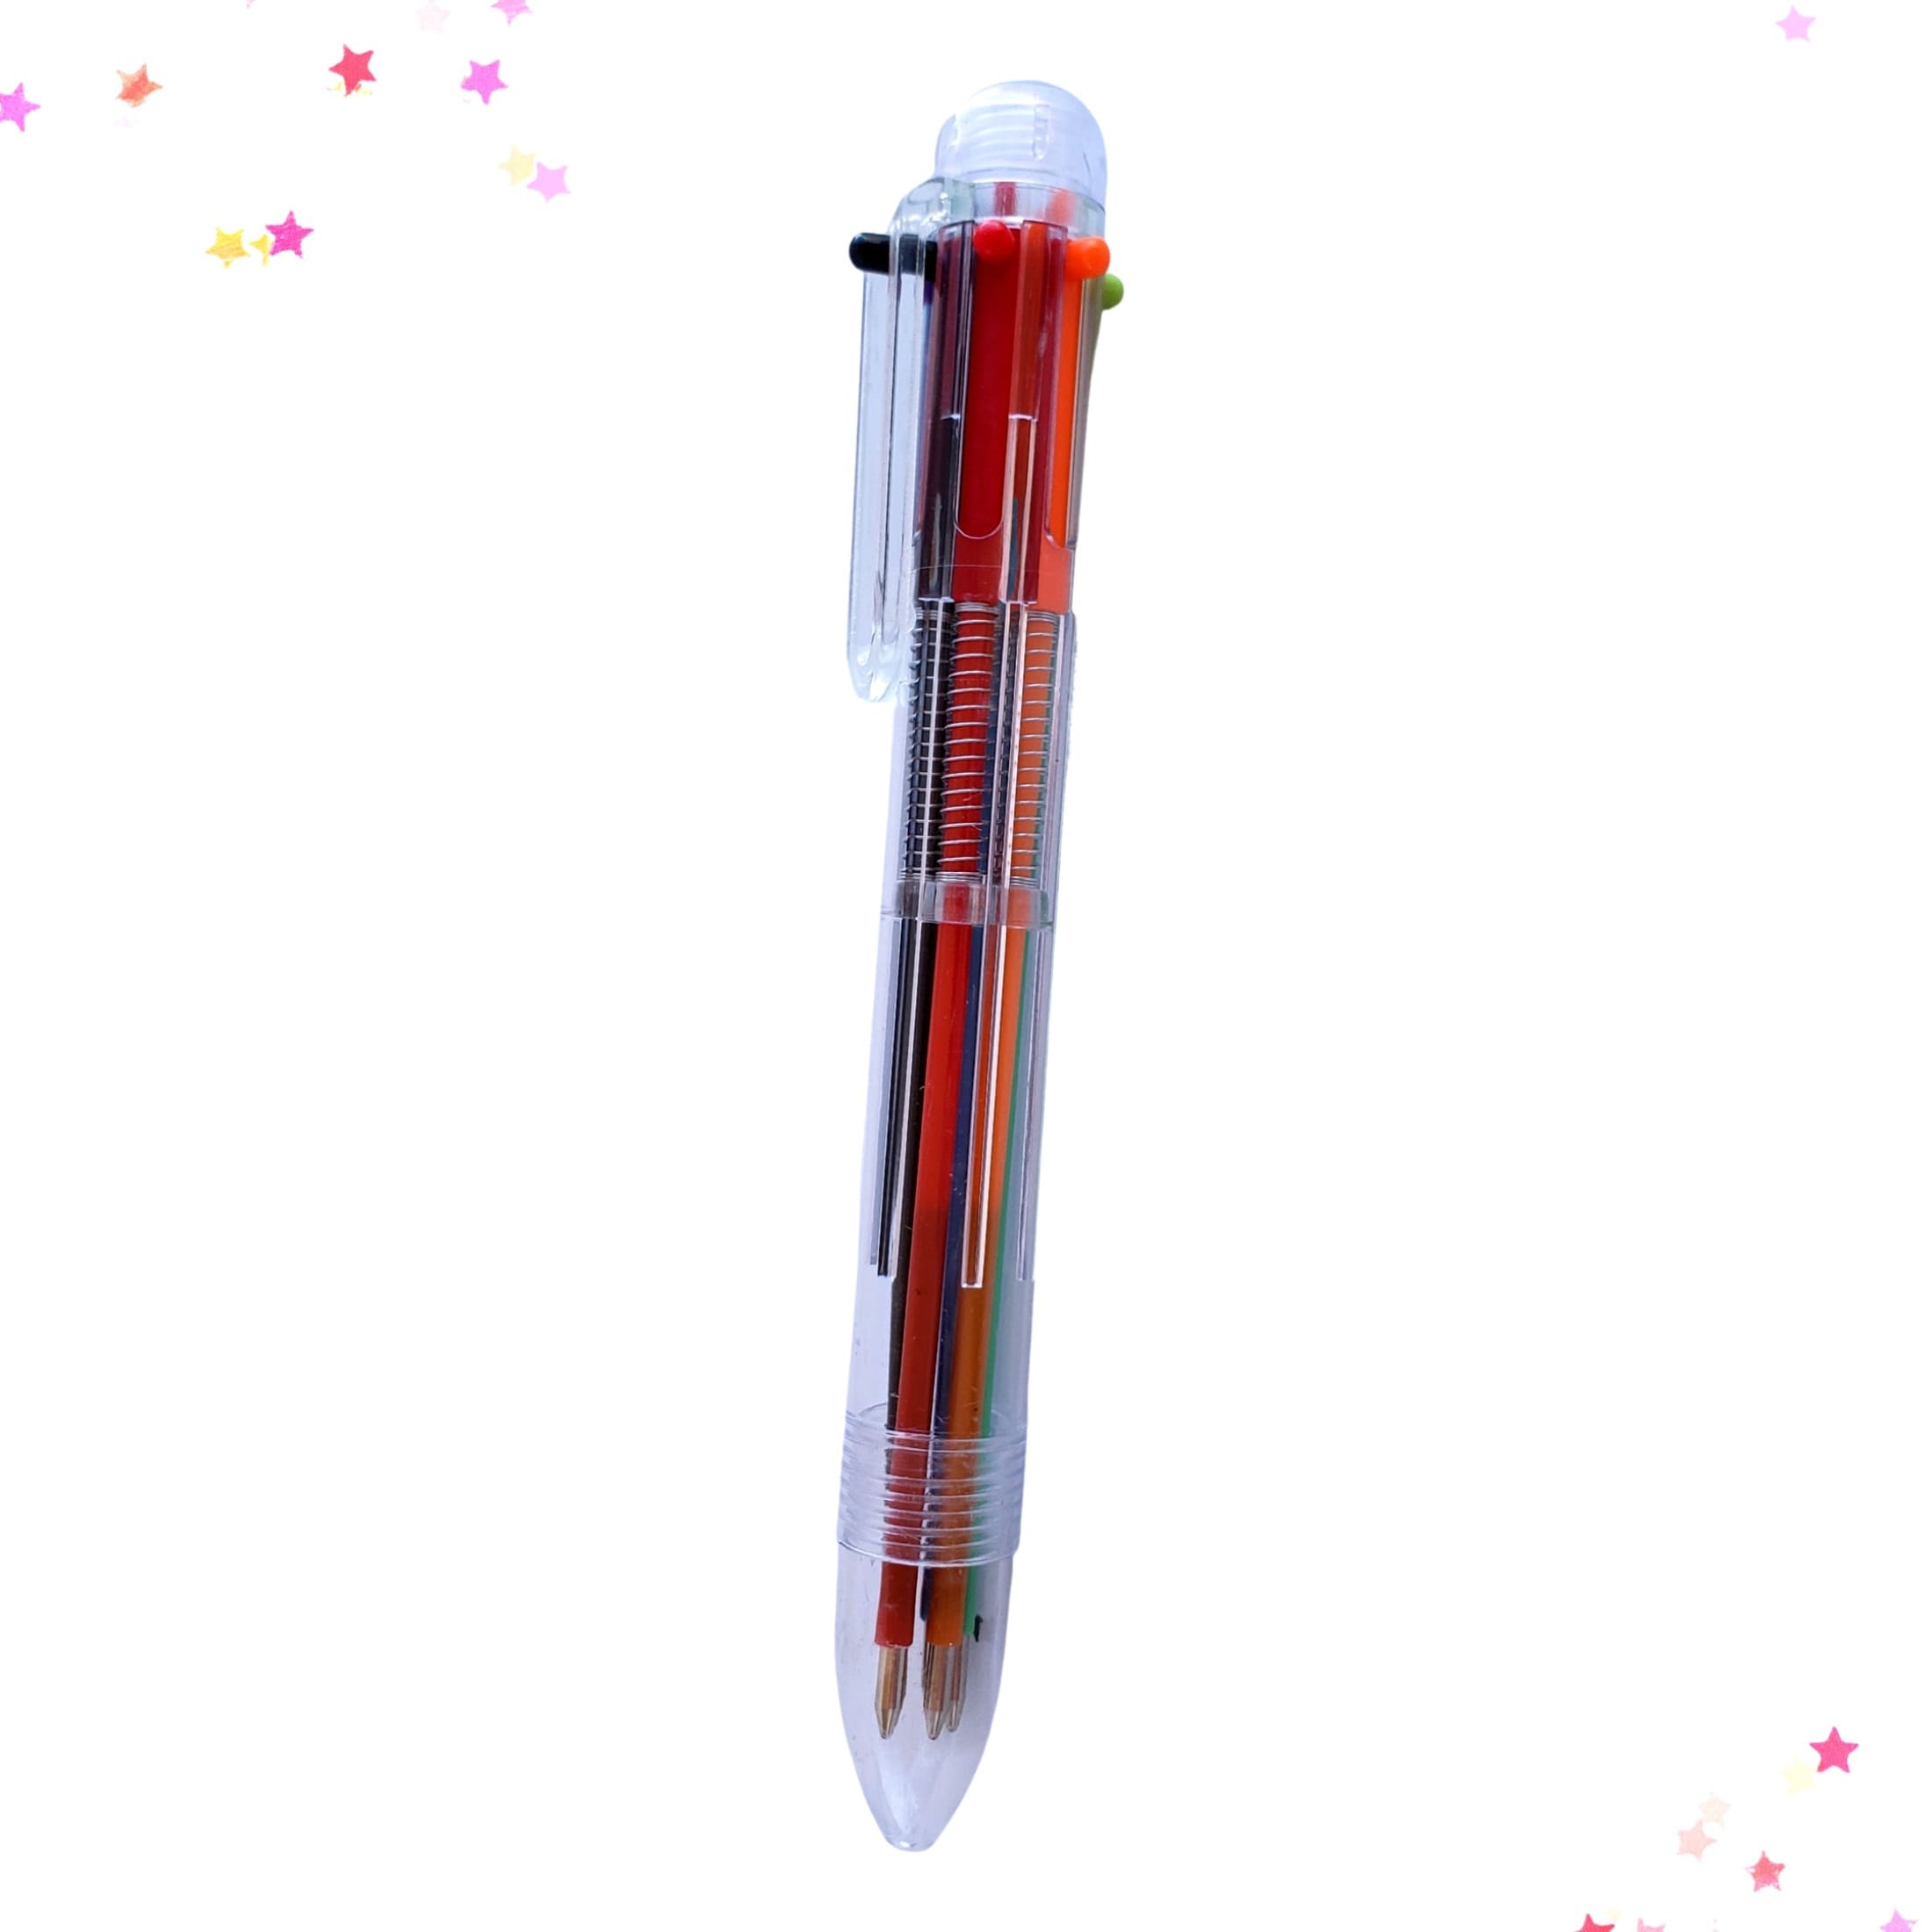 Multicolor 6-in-1 Retractable Transparent Pen